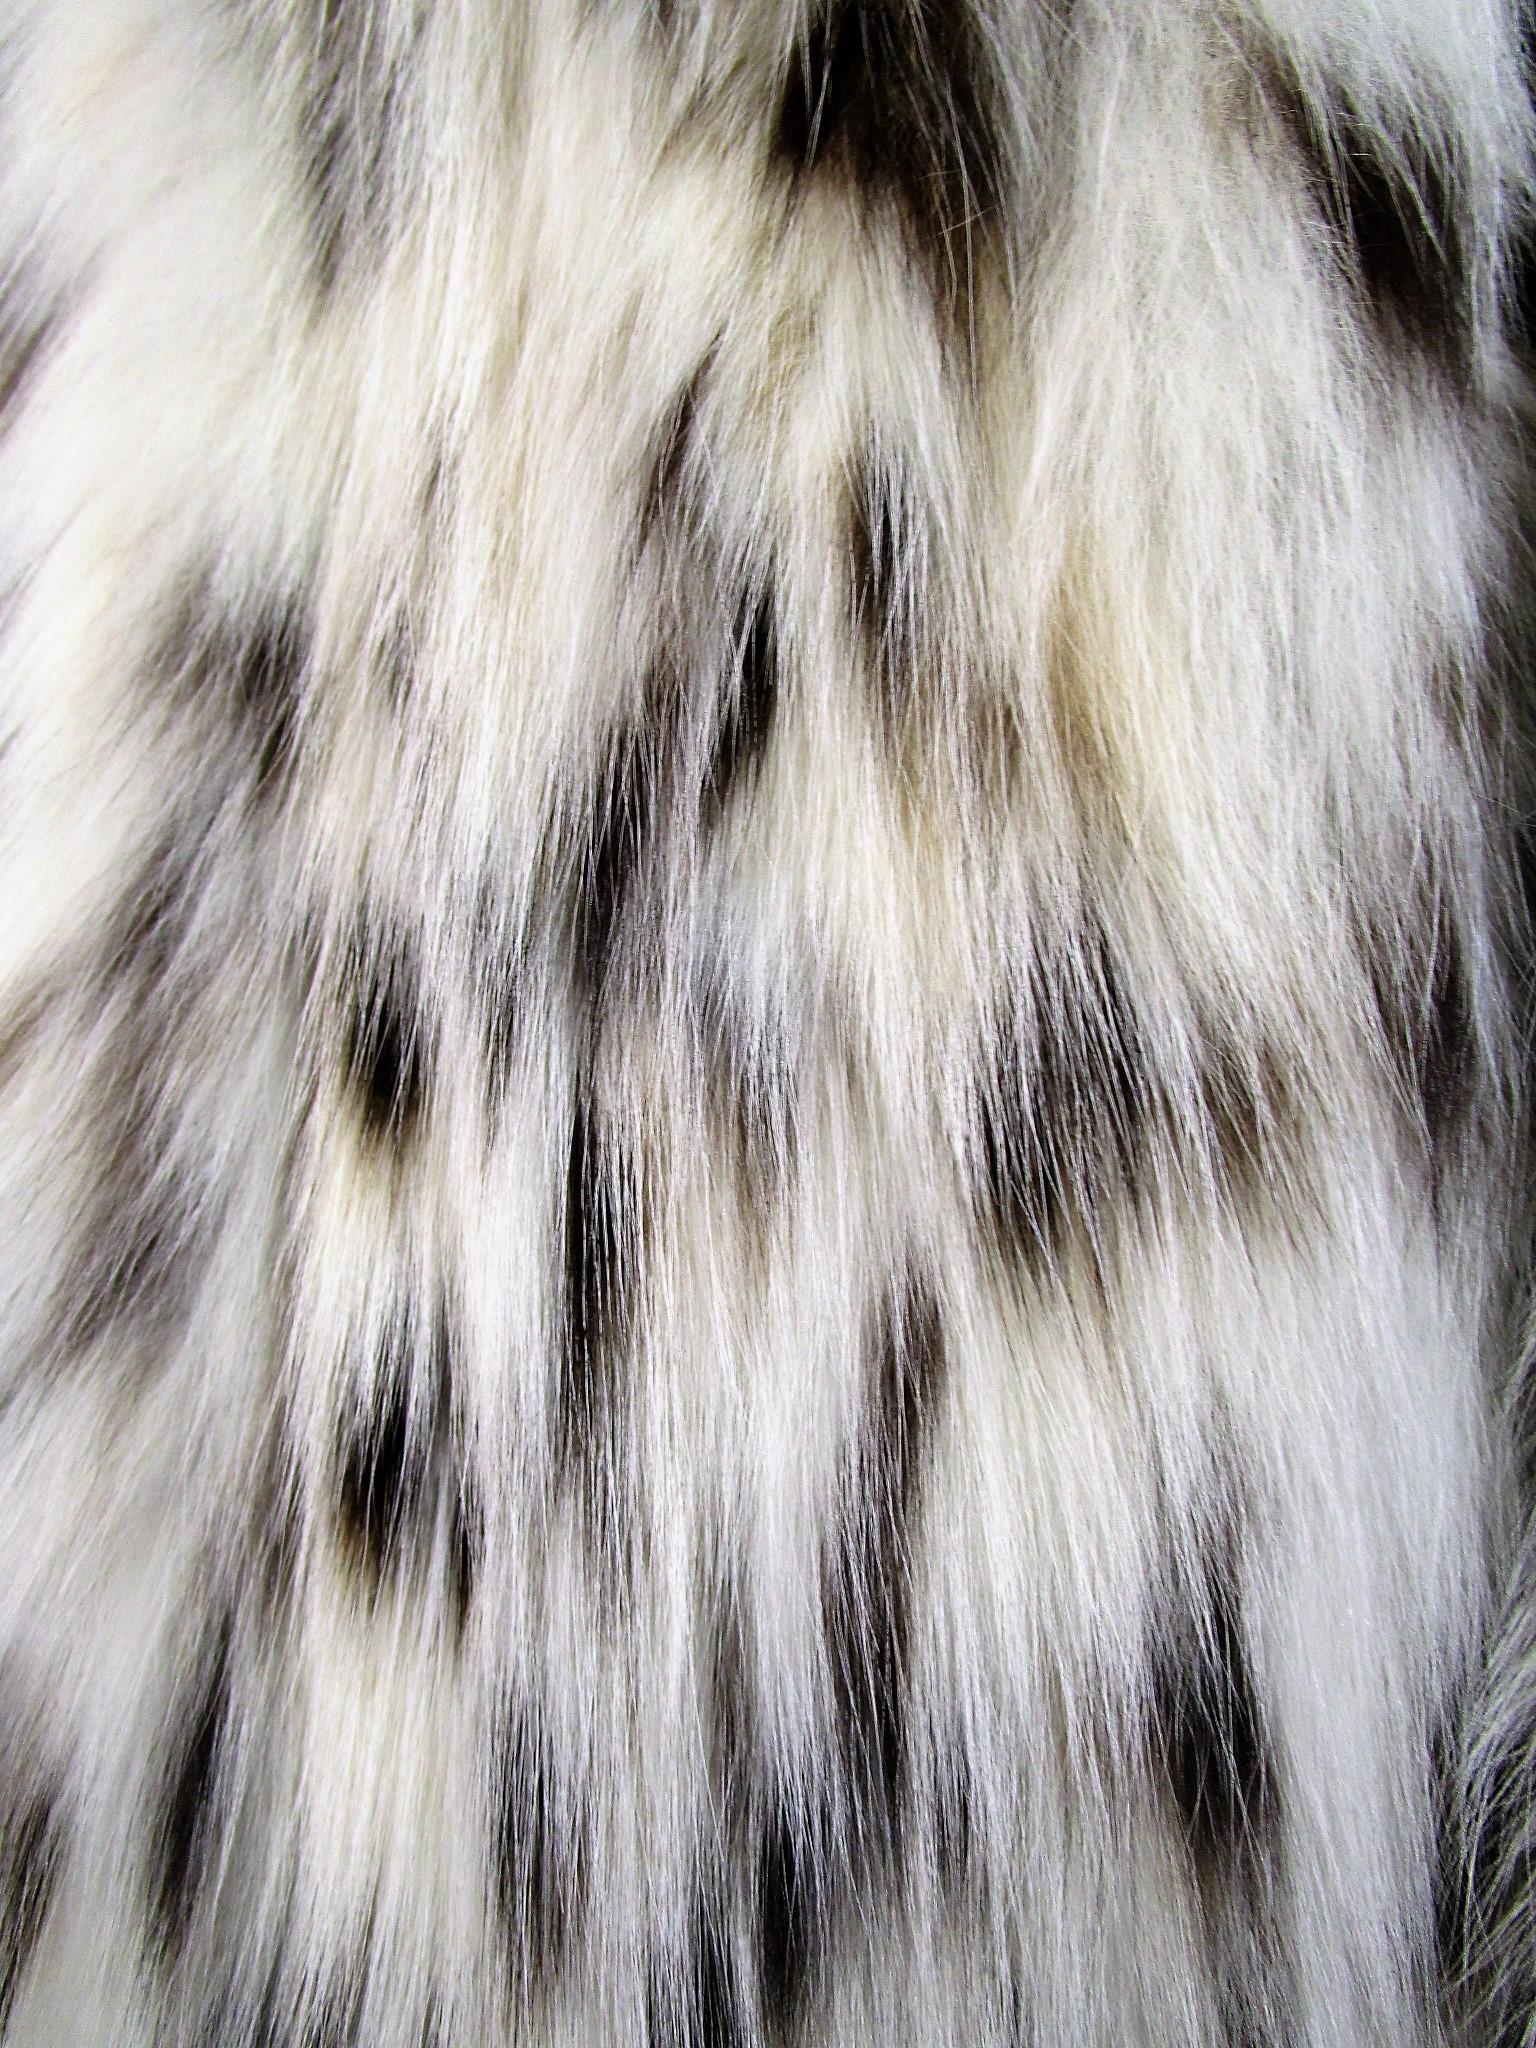 lynx fur coat value